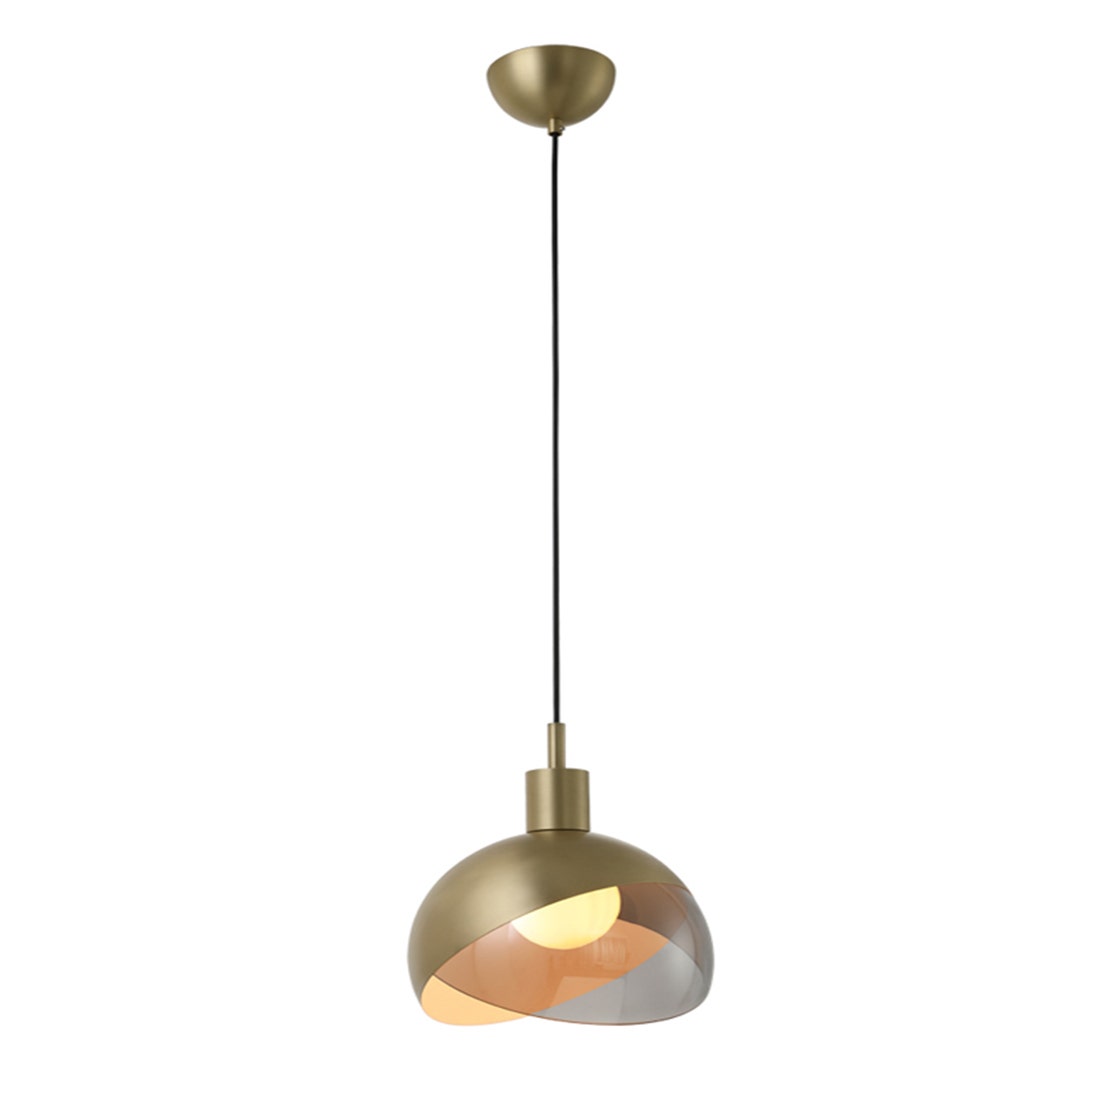 LL PENDENT LAMP#MD10160-1-250/BRASS/MDL สีทอง01